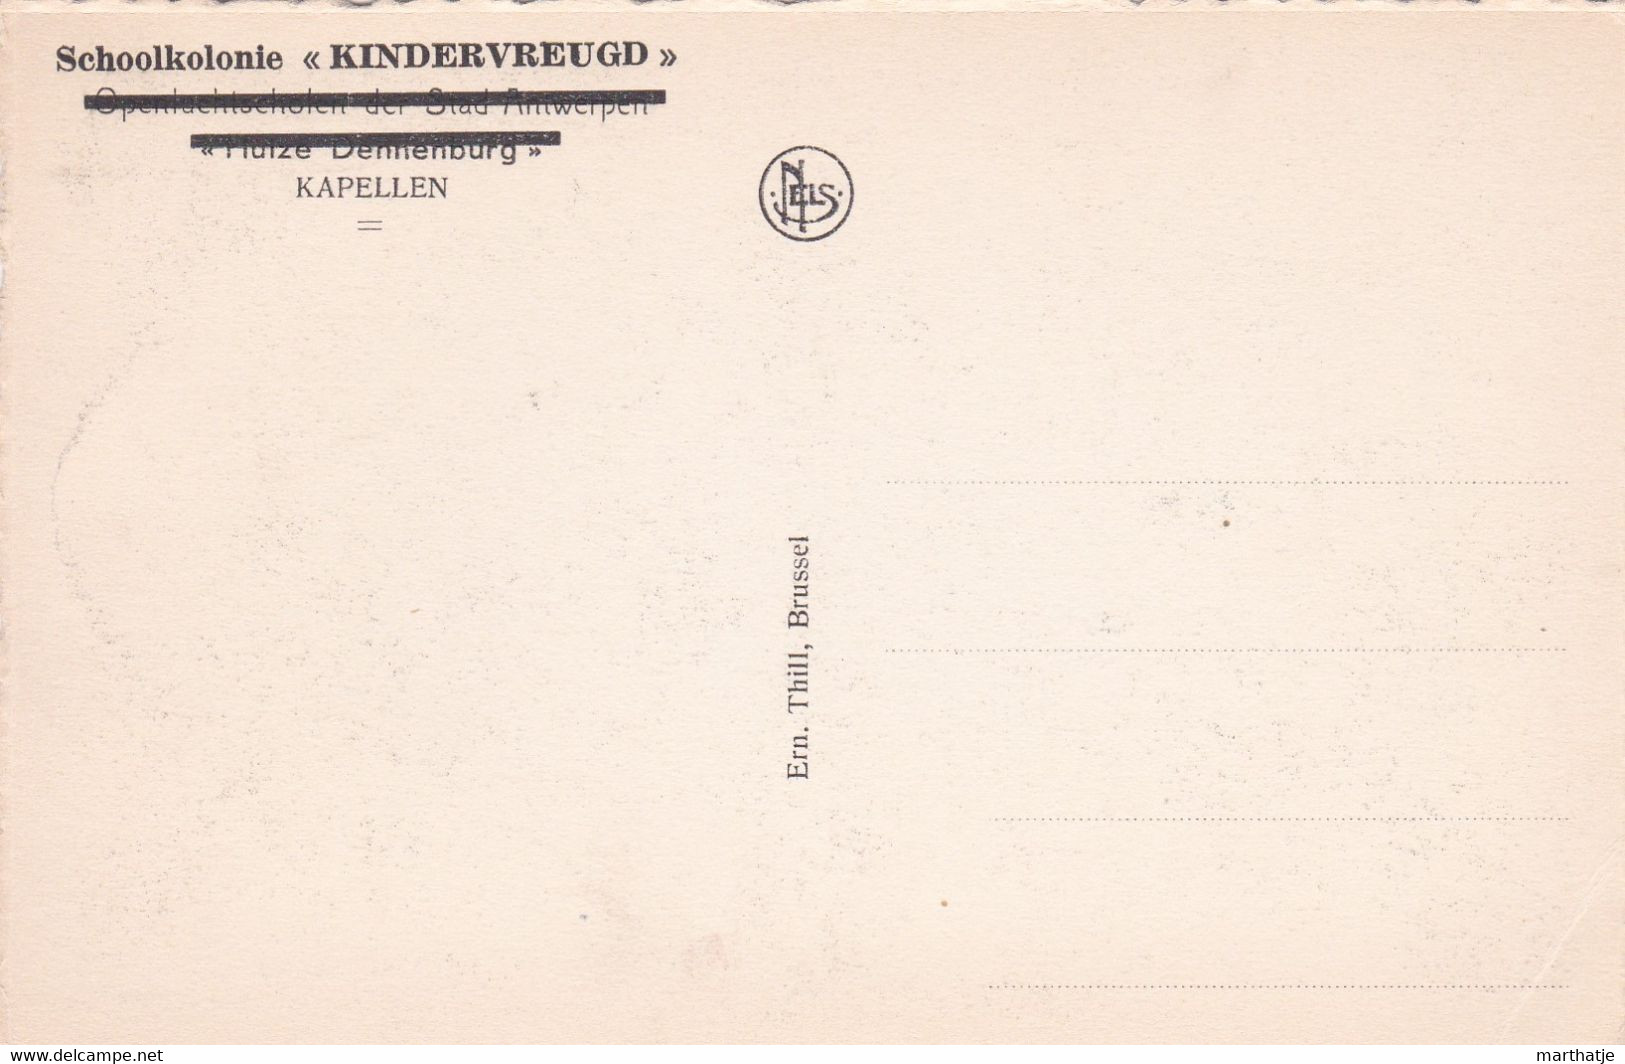 Schoolkolonie "Kindervreugd" - Openluchtscholen Der Stad Antwerpen - "Huize Dennenburg" - KAPELLEN - Kapellen